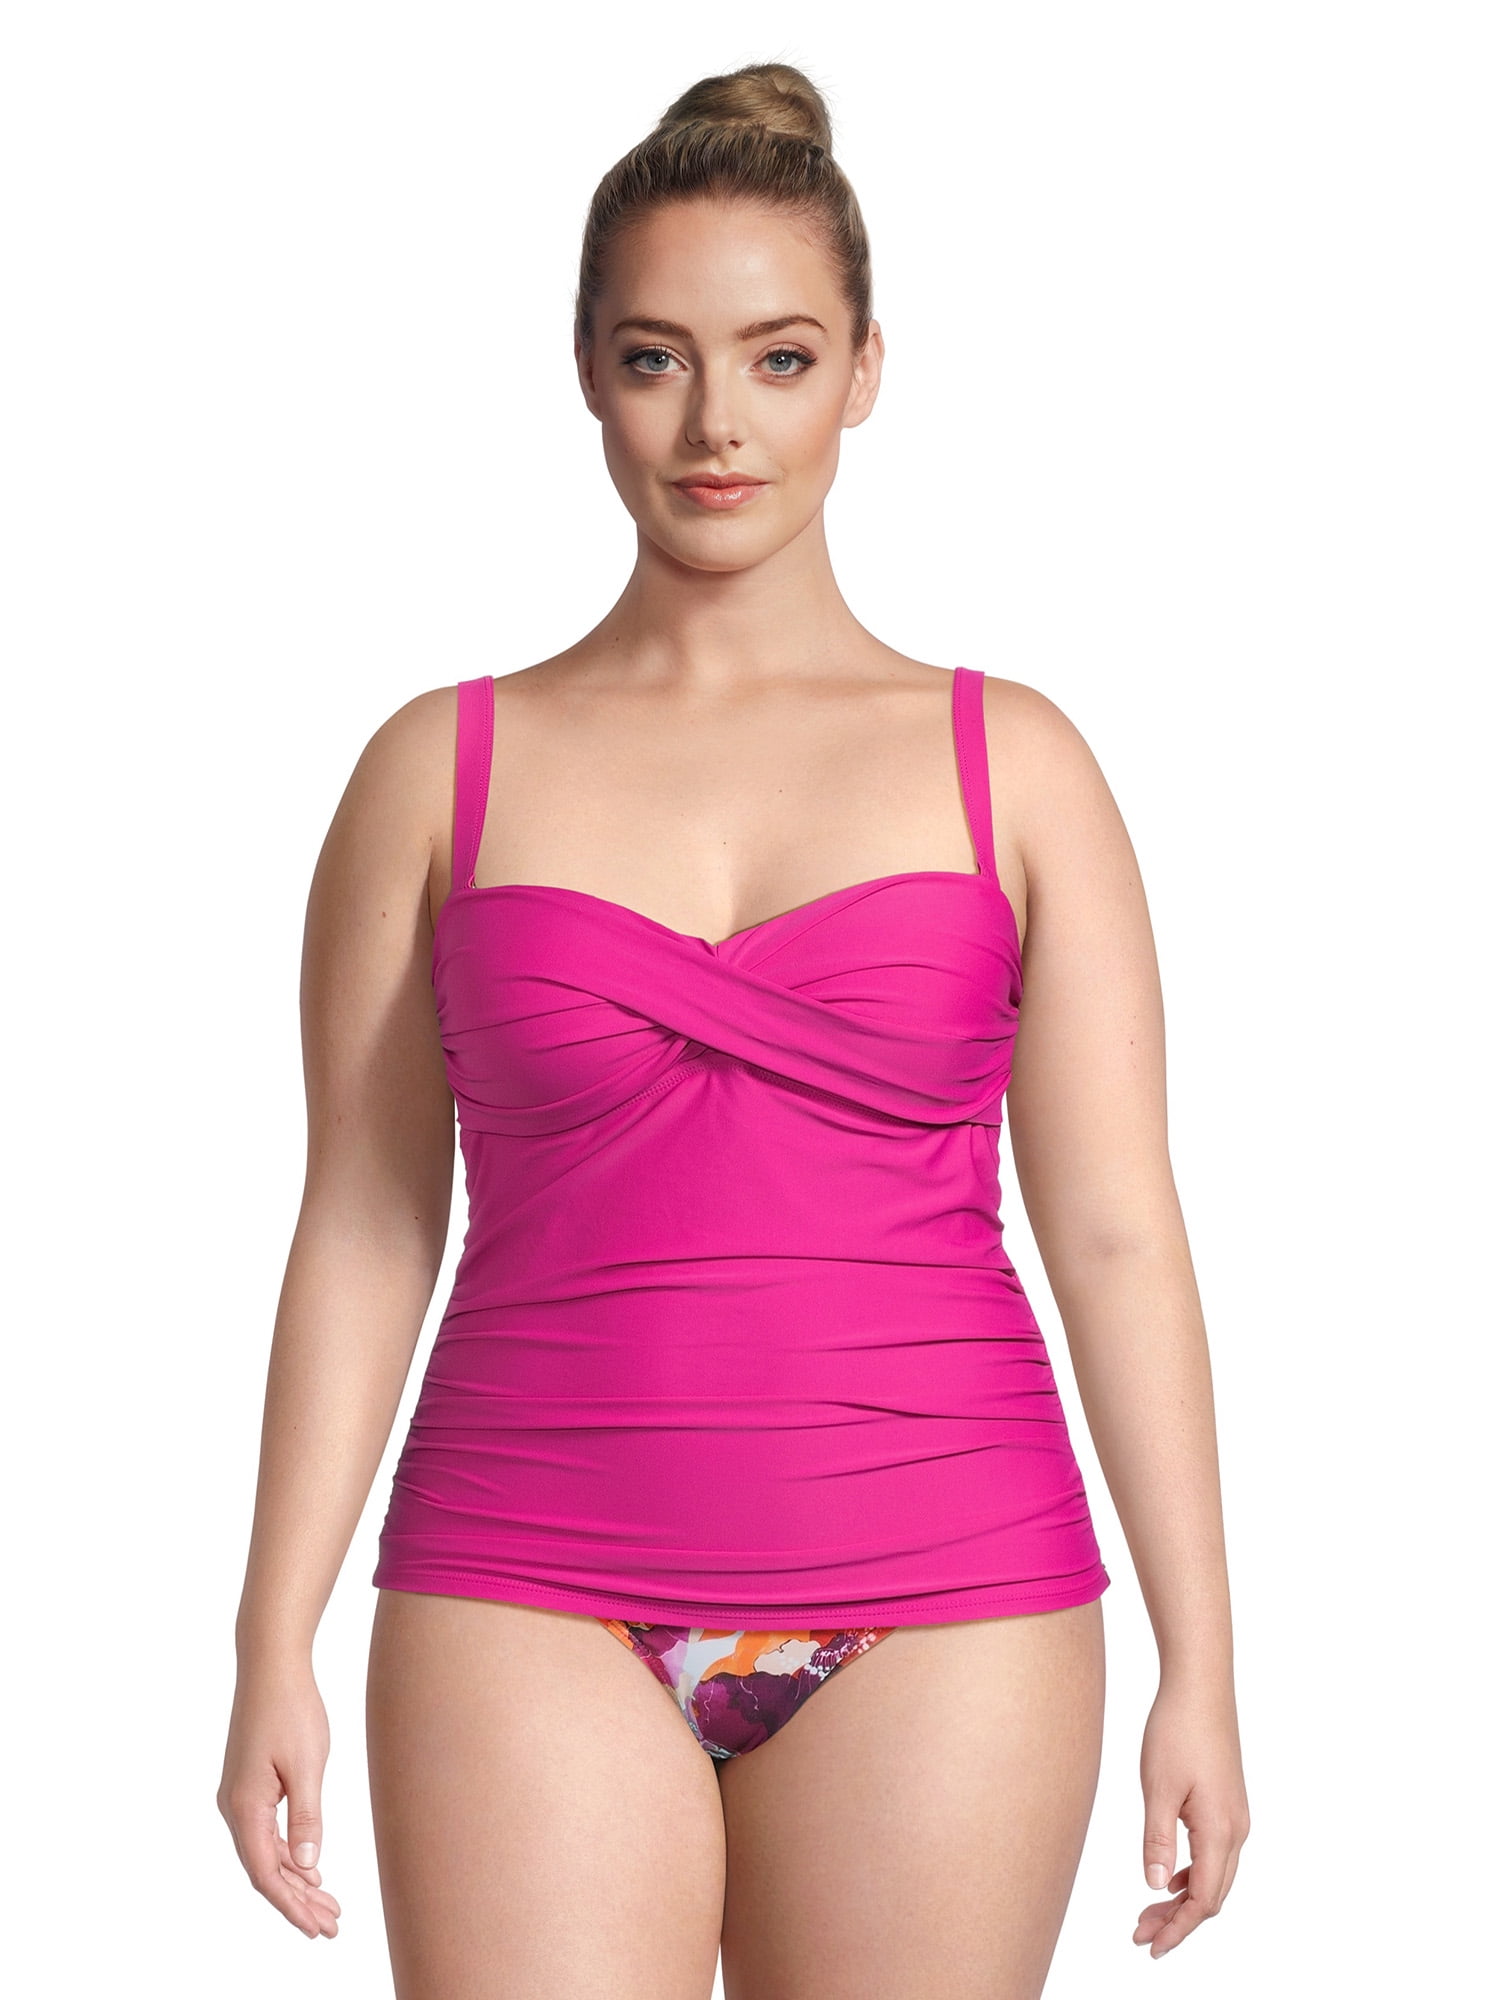 Plus Size Designer Swimwear Nicole Miller Plus Size Swimsuit